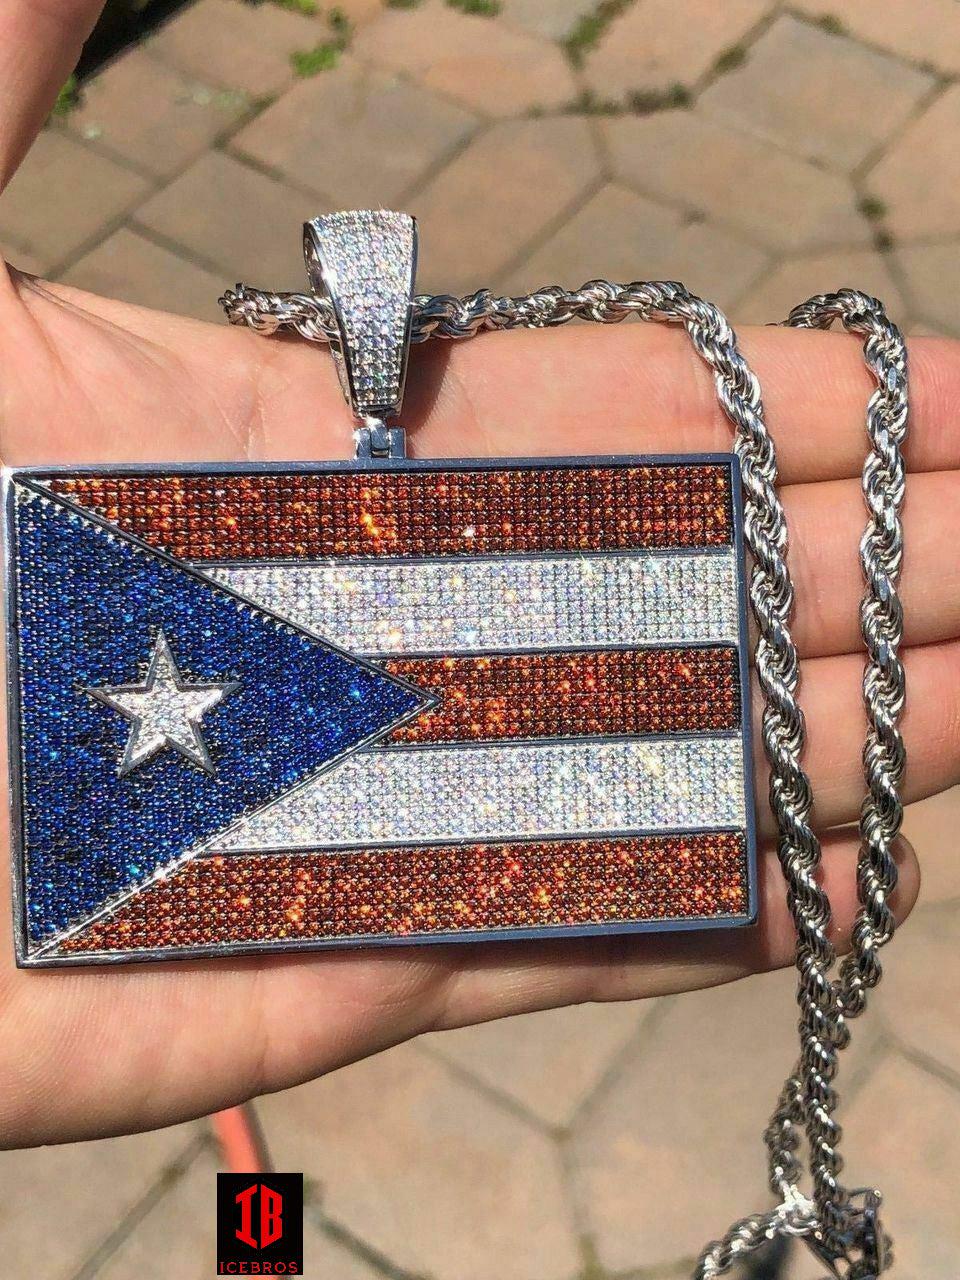 HUGE 2X3" 925 Silver Puerto Rico Flag Pendant BORICUA Rican Chain 20ct Colorful